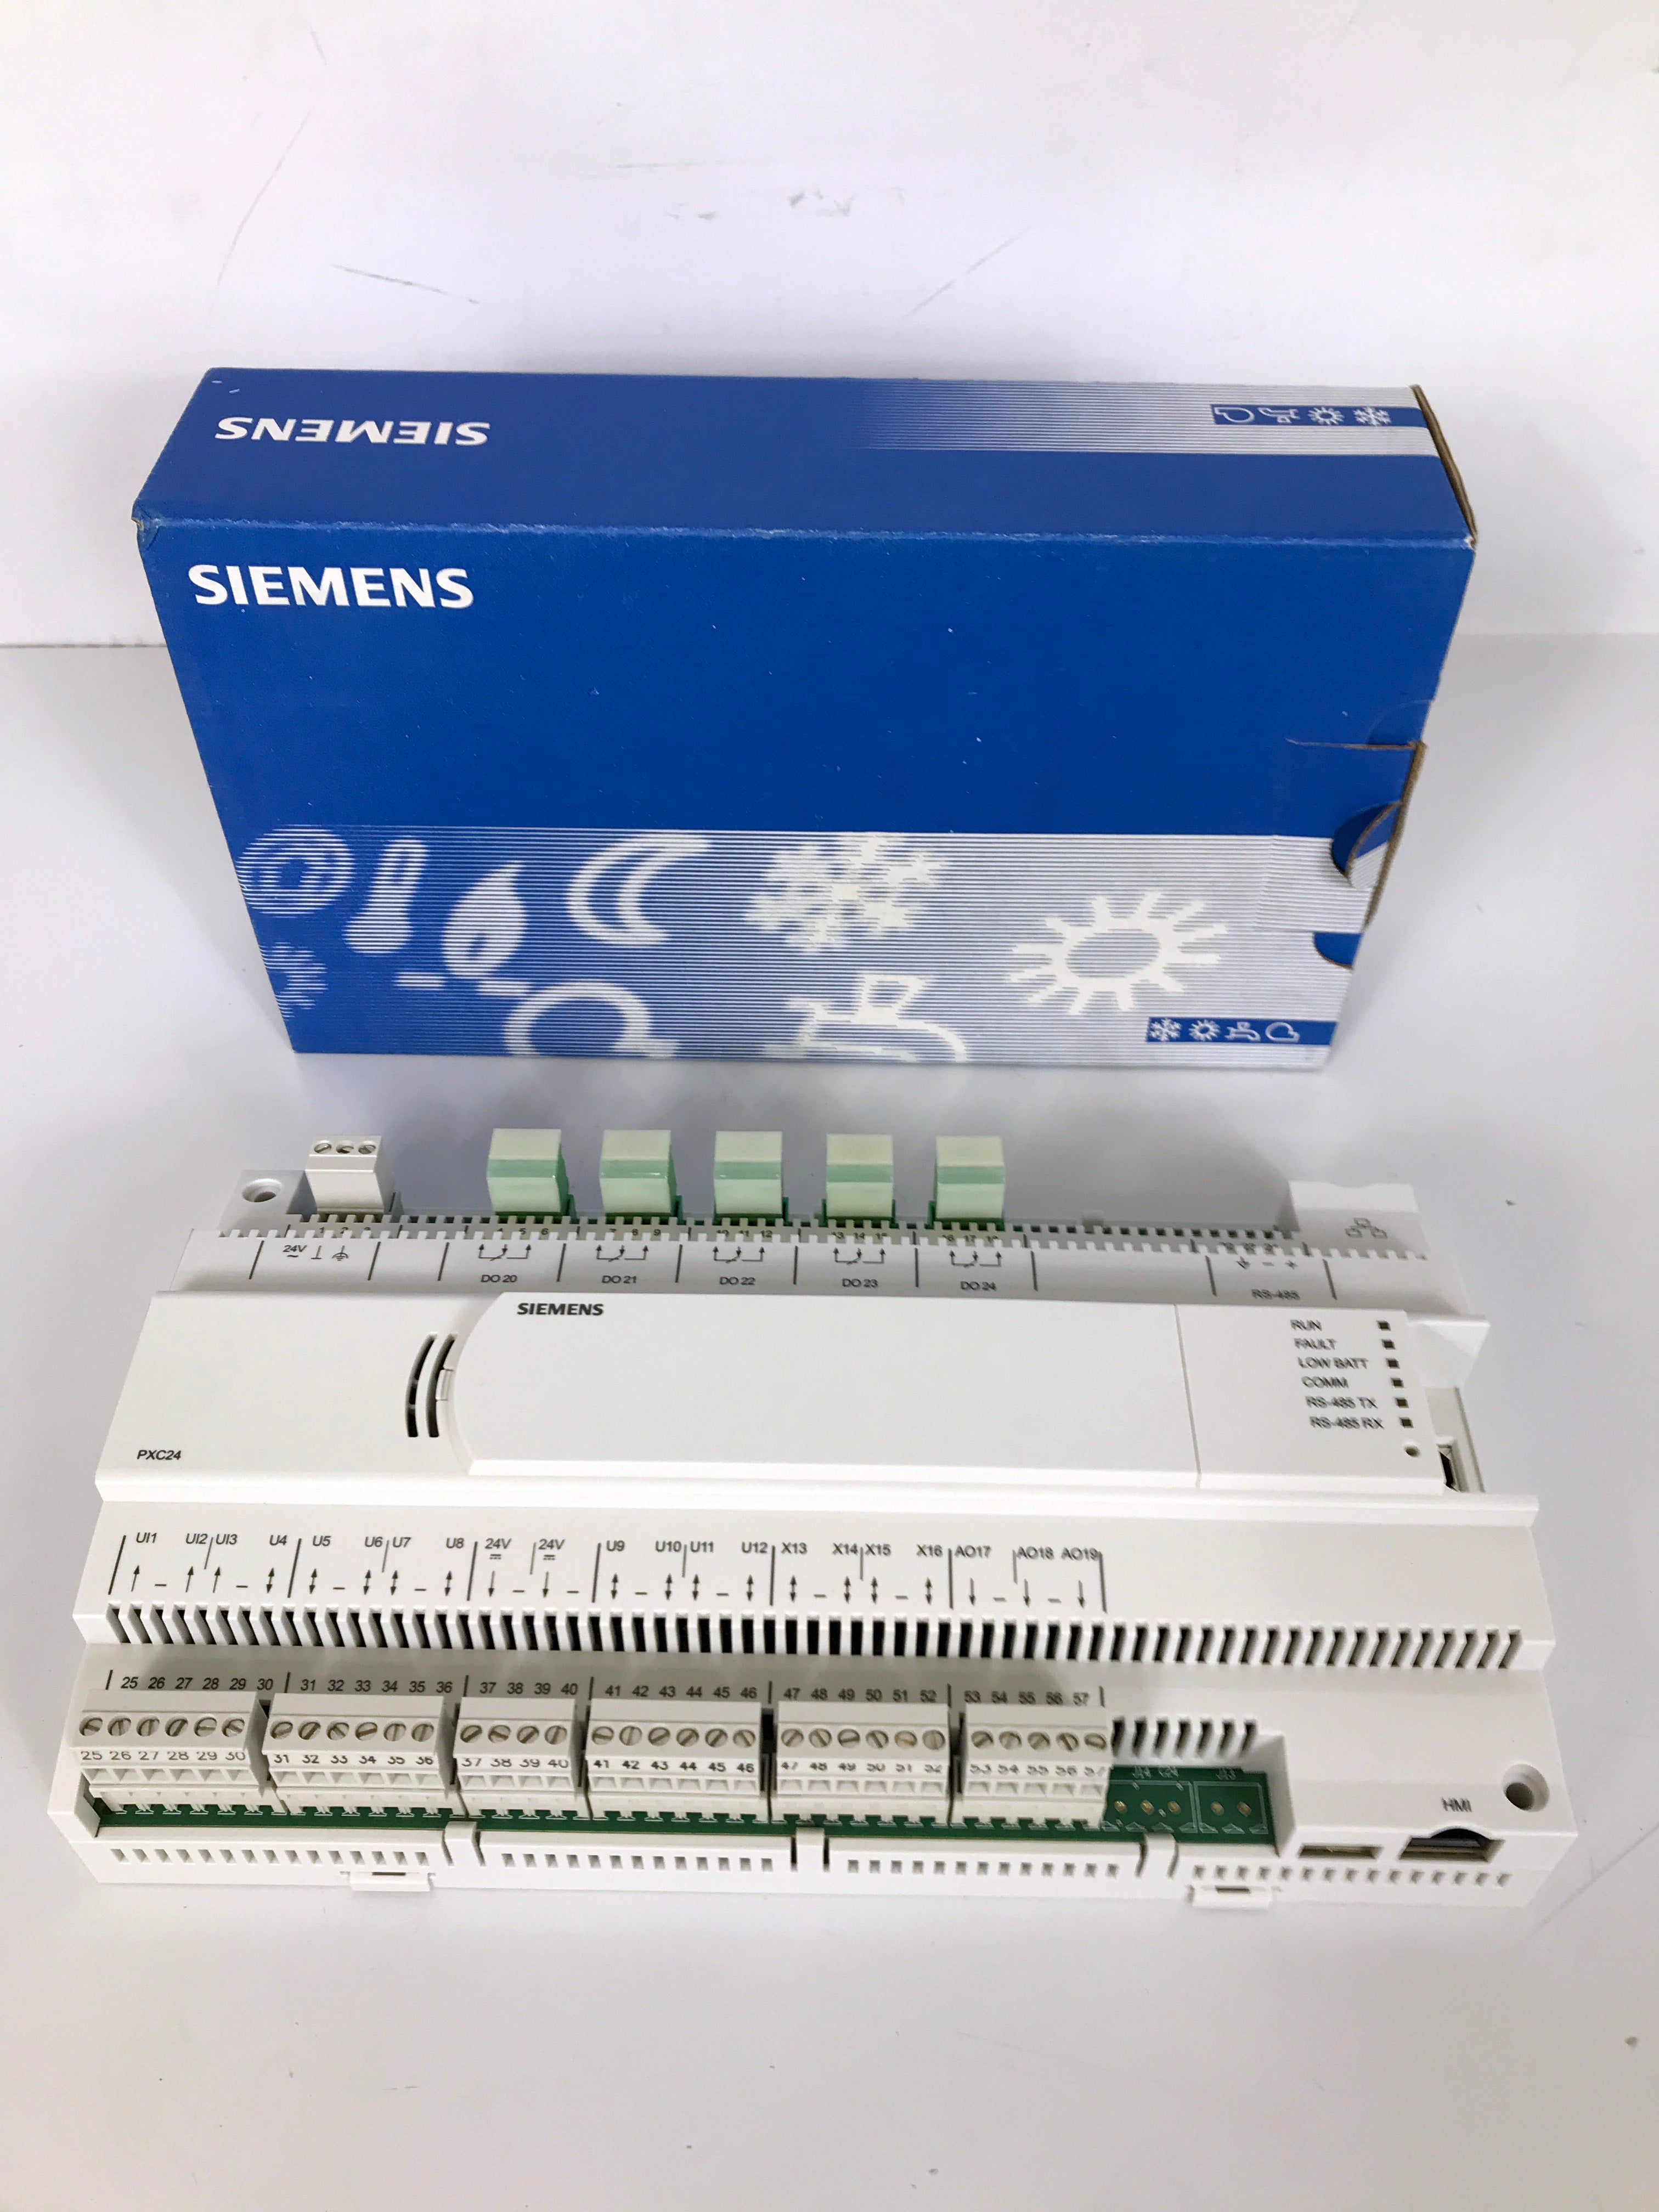 *New* Siemens Smoke Control System Equipment Controller PXC24-PE